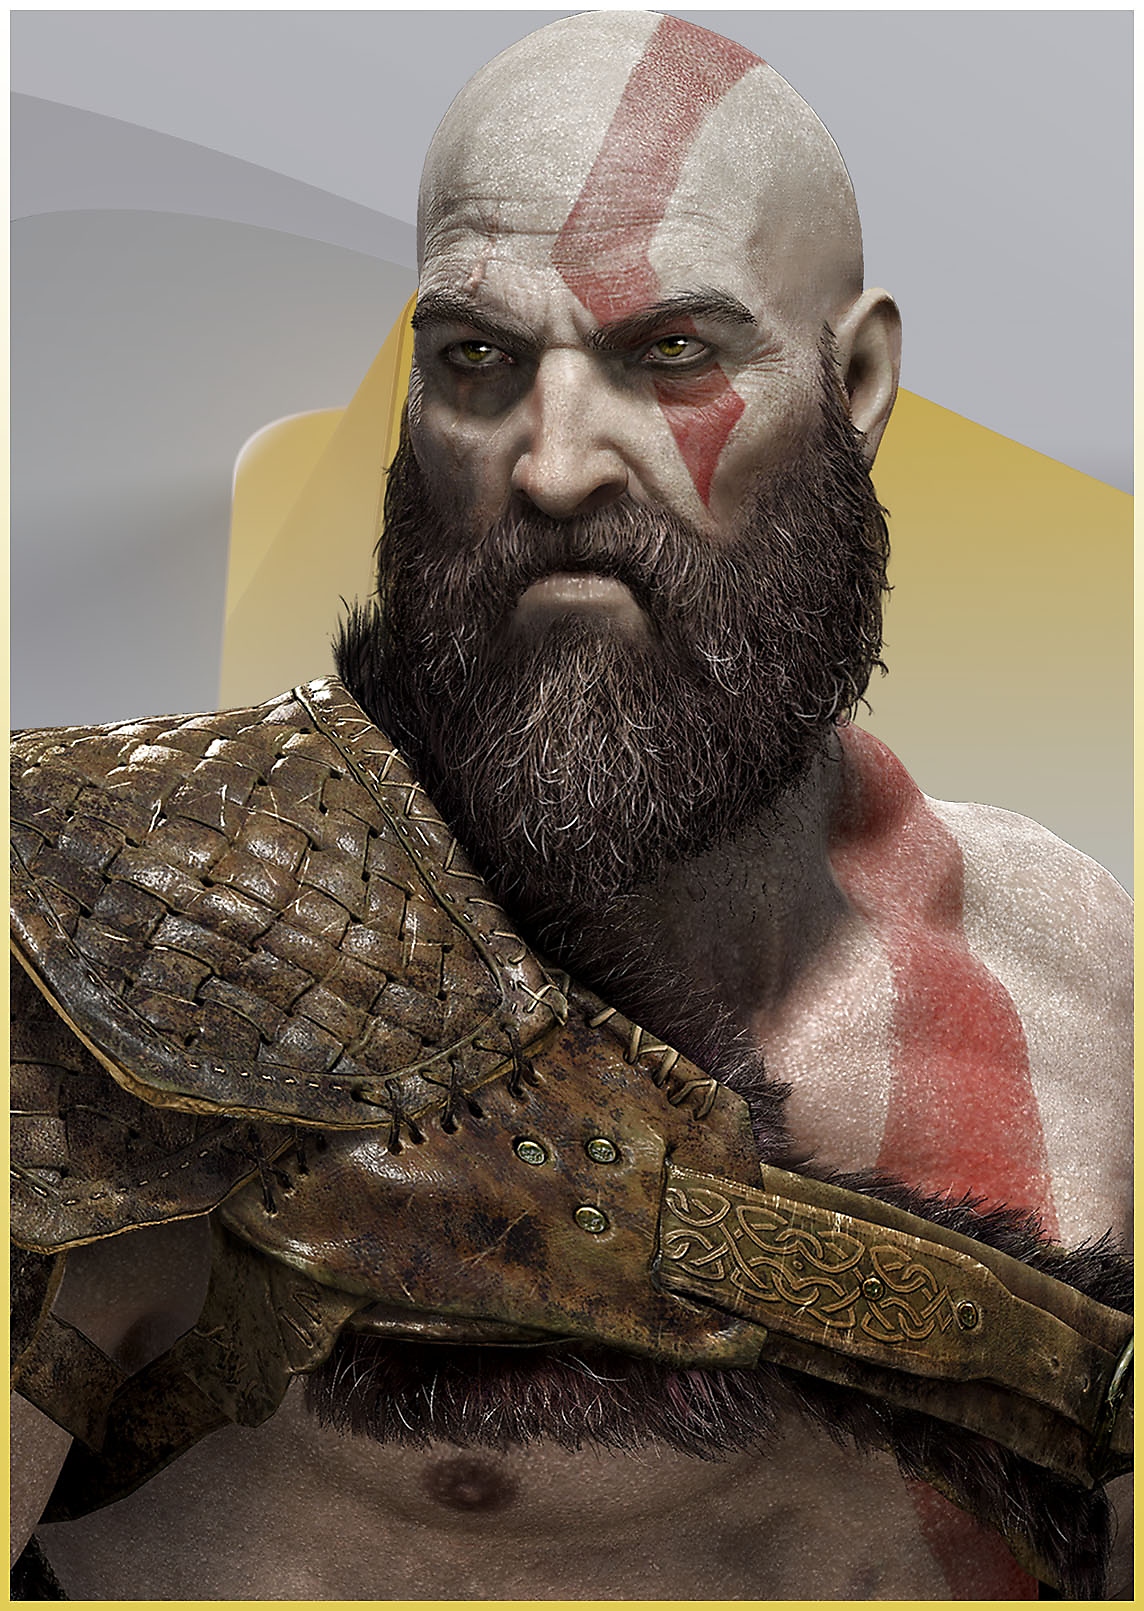 Kratos fra God of War ser sint ut